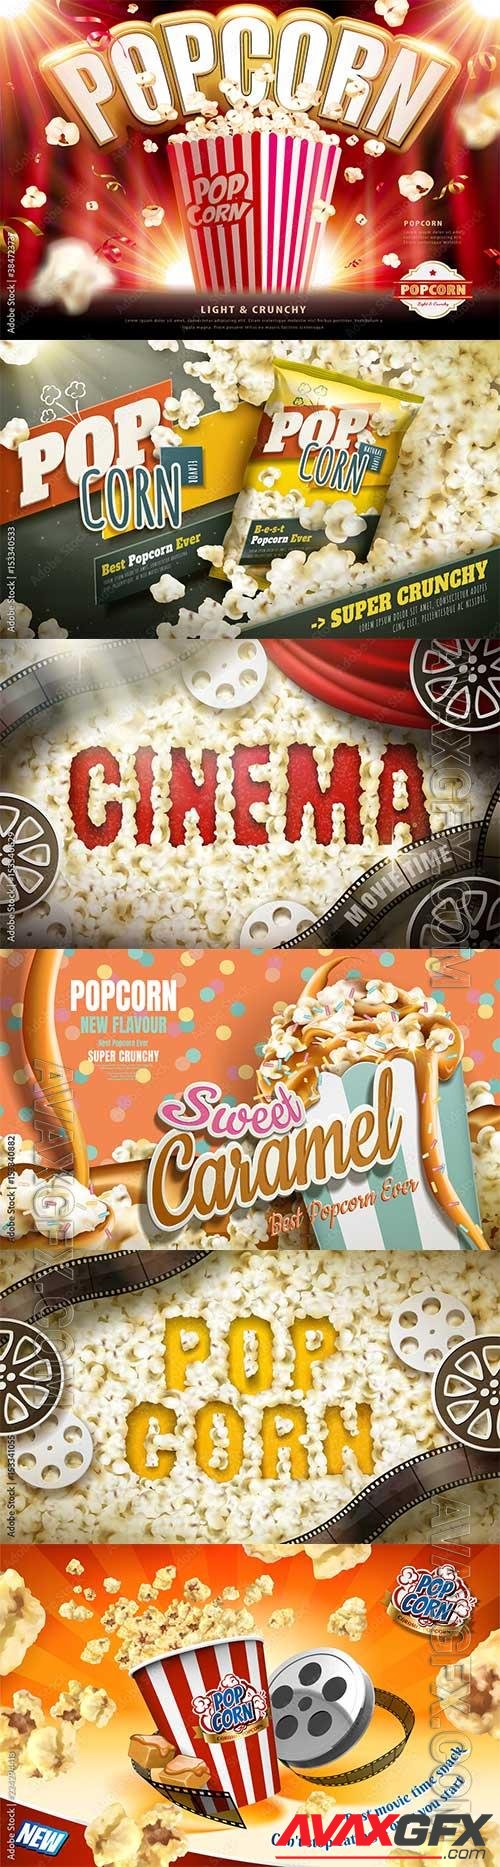 Delicious popcorn ads vector design